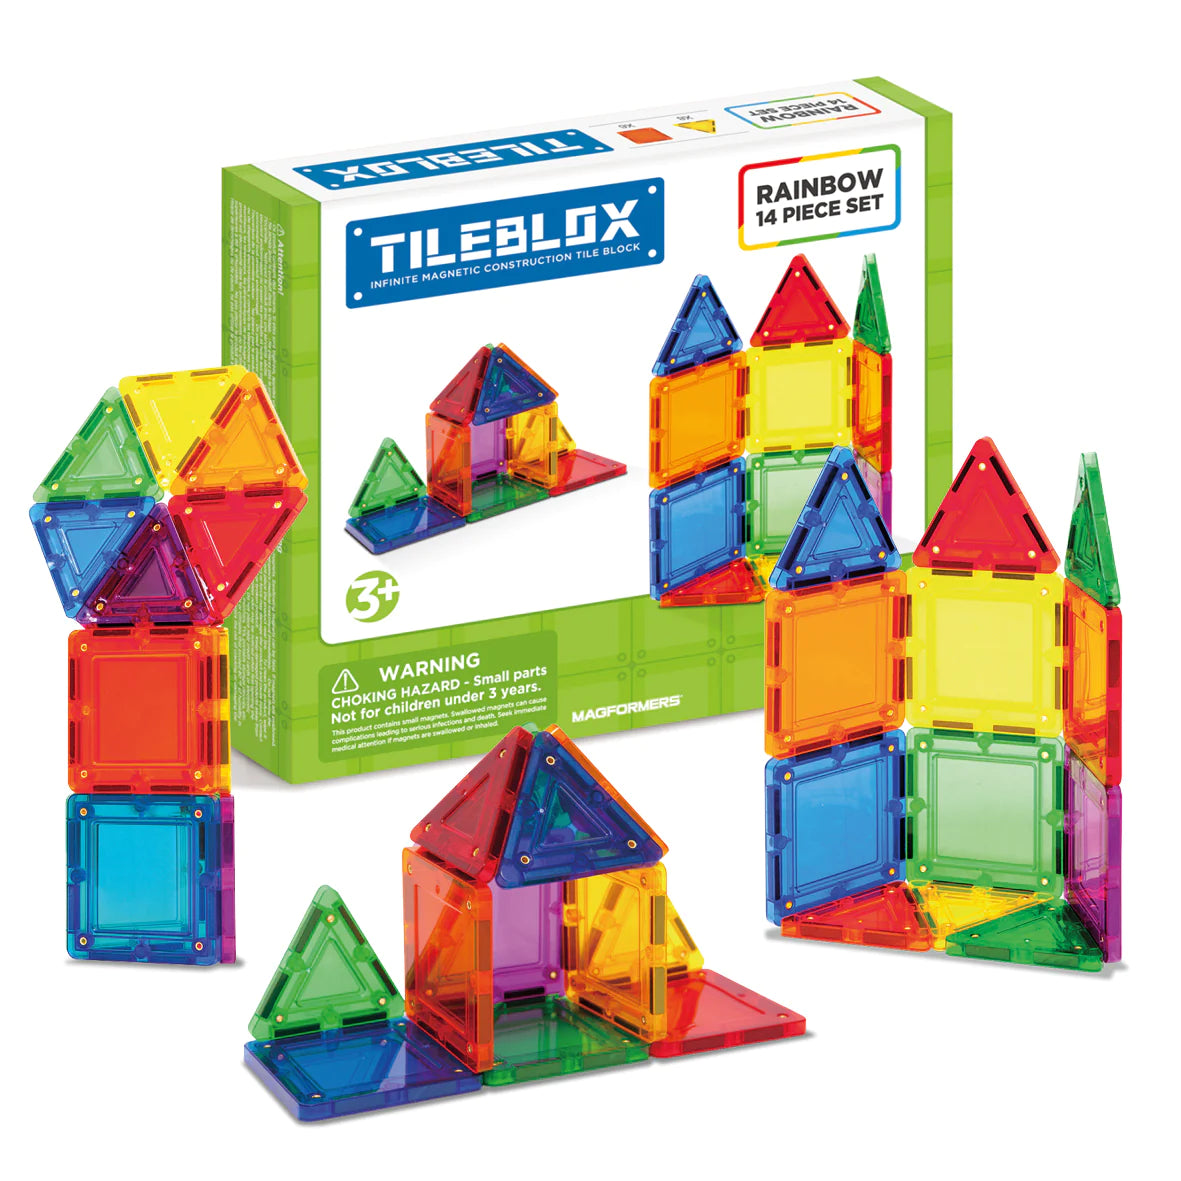 Magformers Tileblox 14pc Rainbow Set